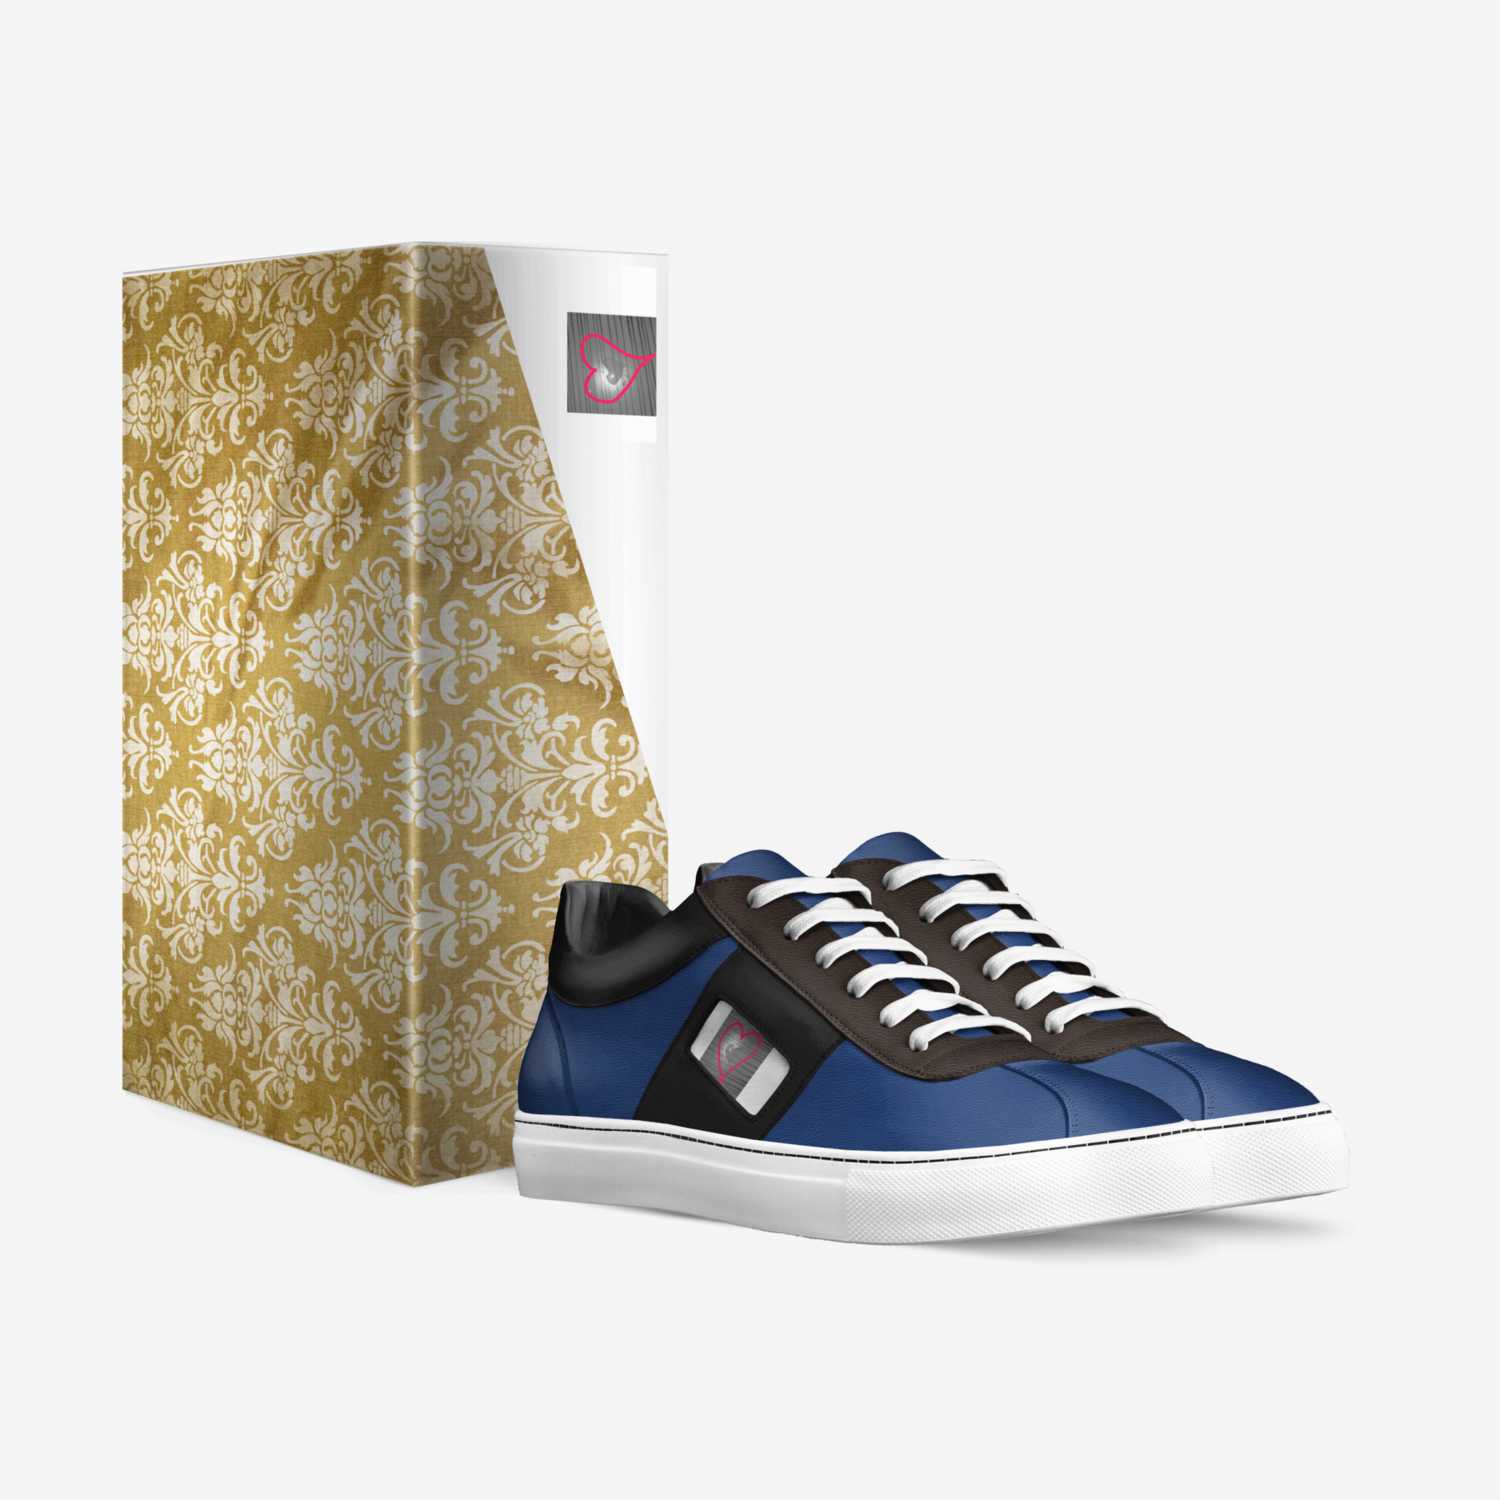 Landz custom made in Italy shoes by Nico Orlando | Box view